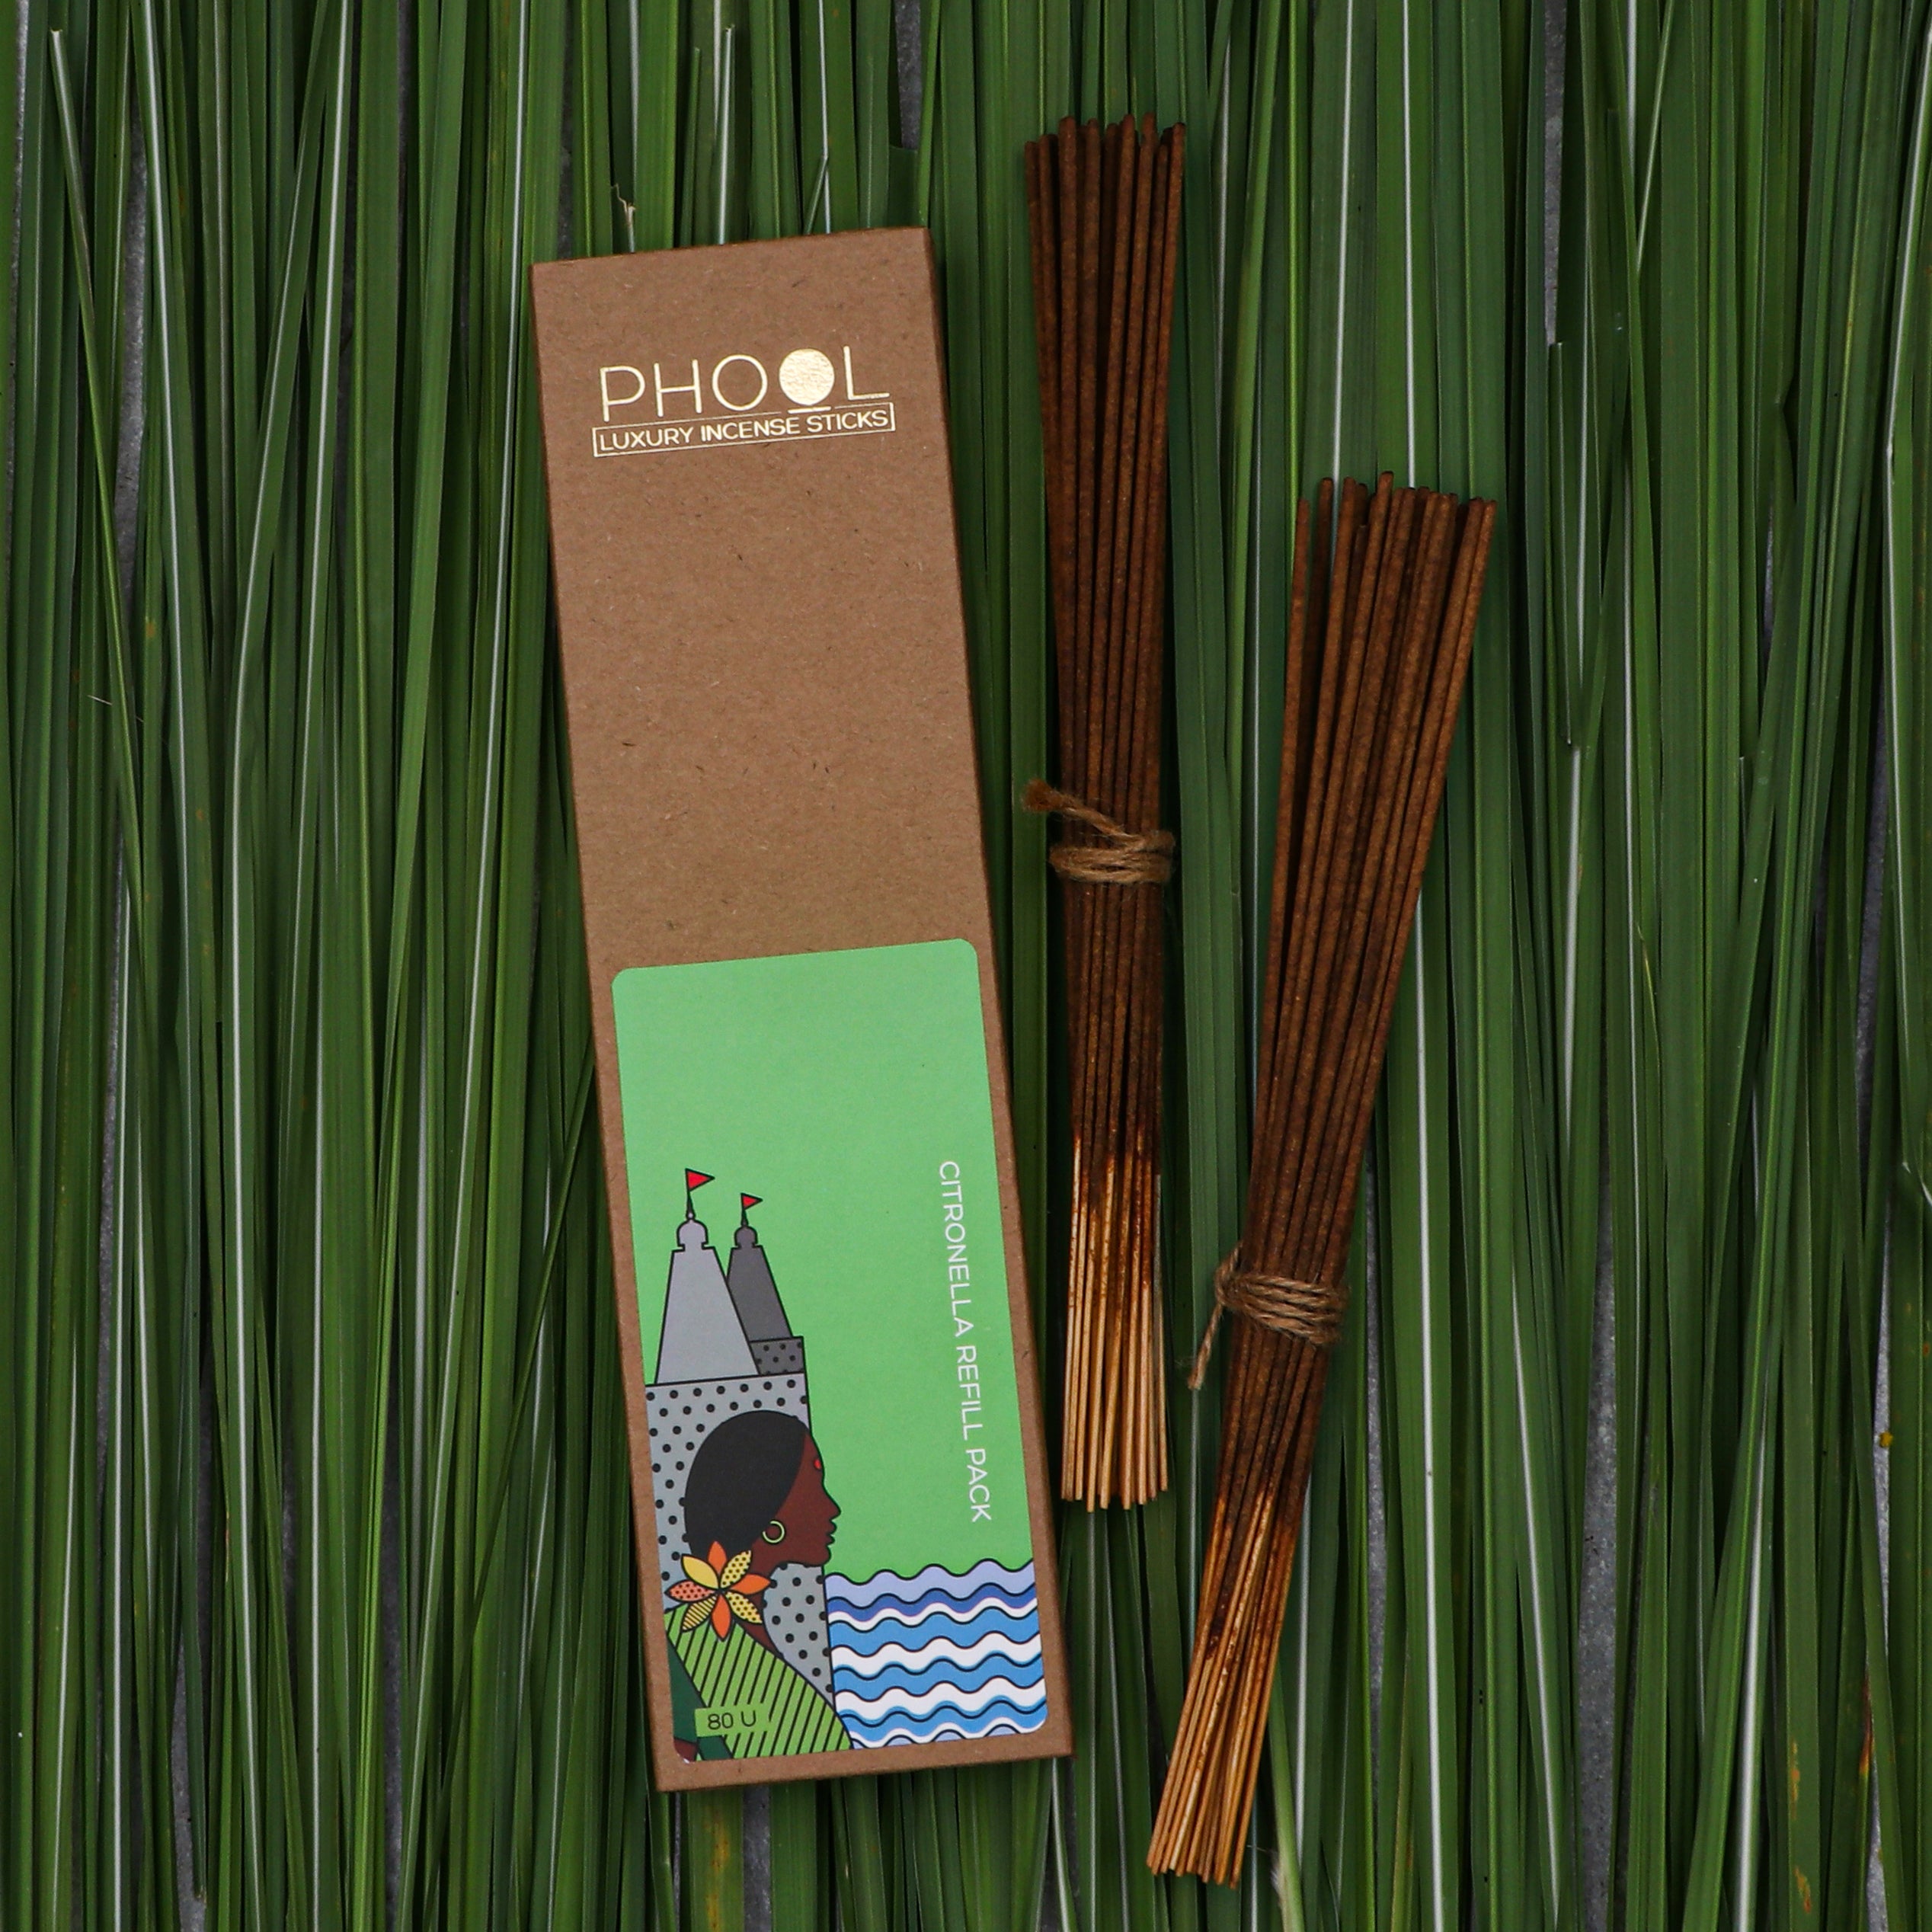 Phool Natural Incense Sticks Refill pack - Citronella